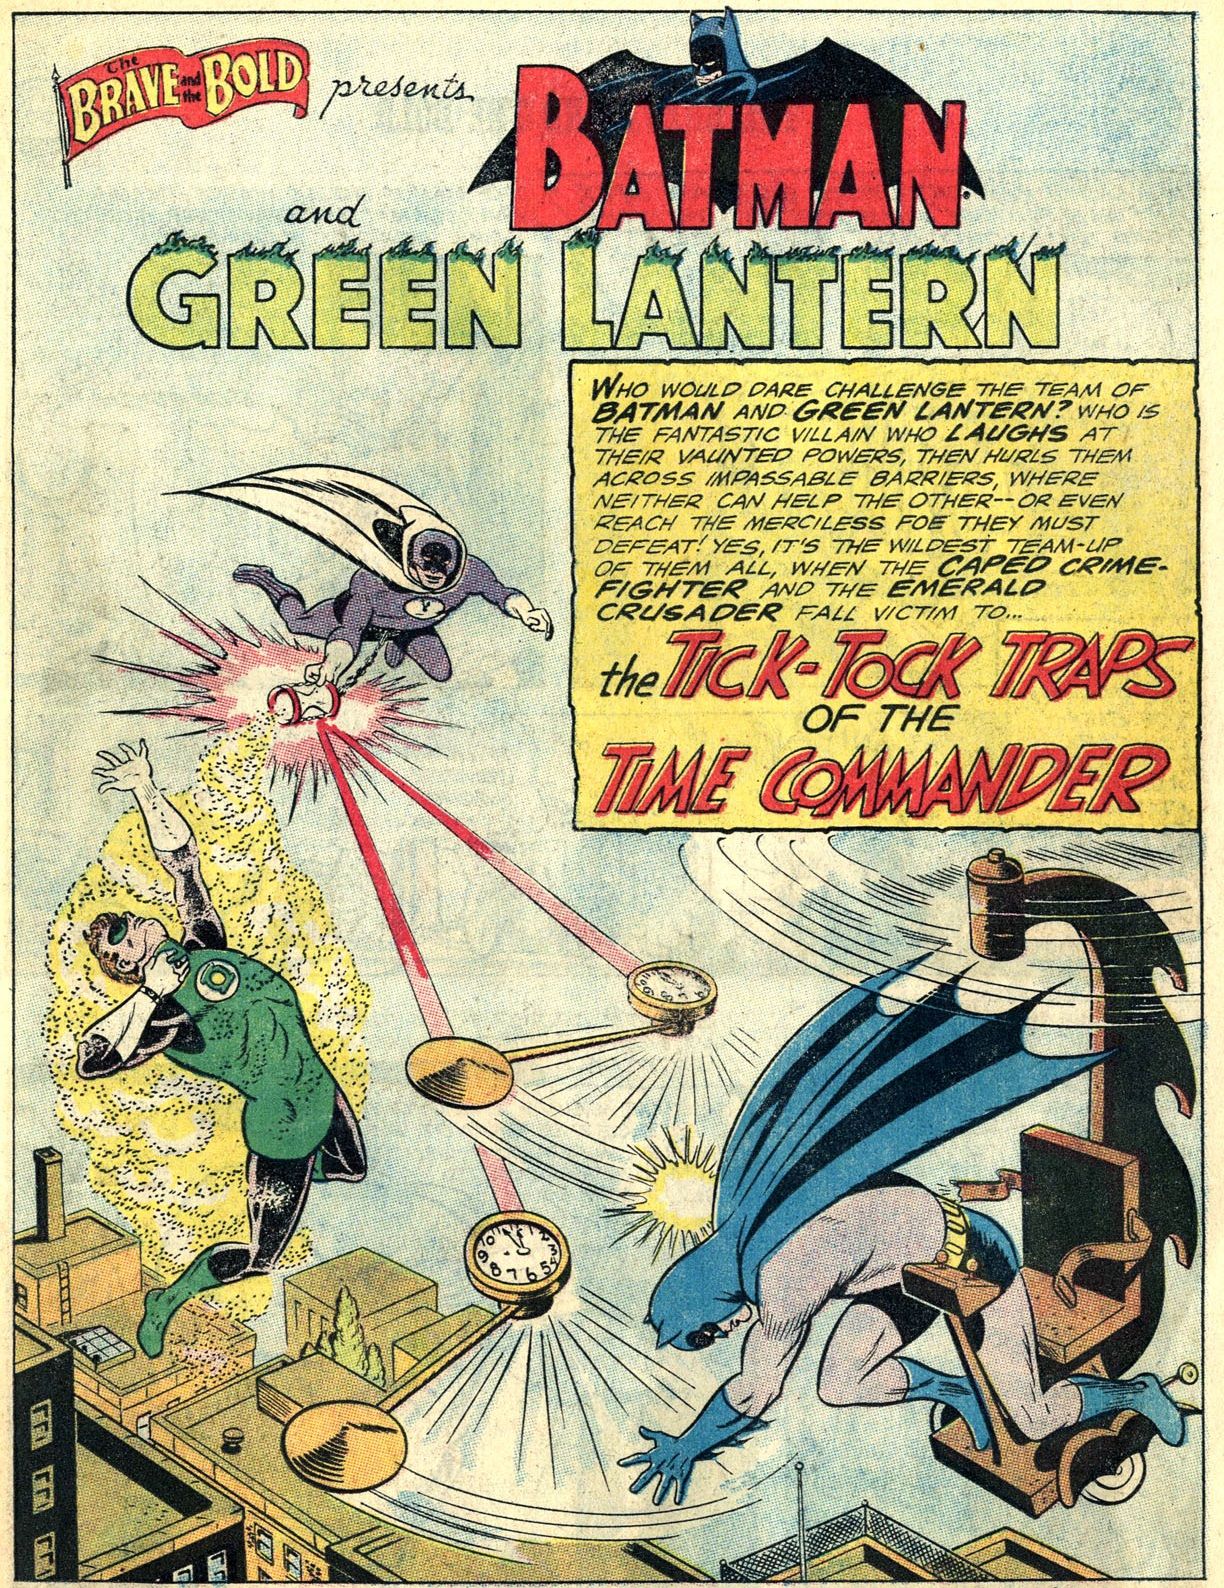 Batman and Green Lantern team-up